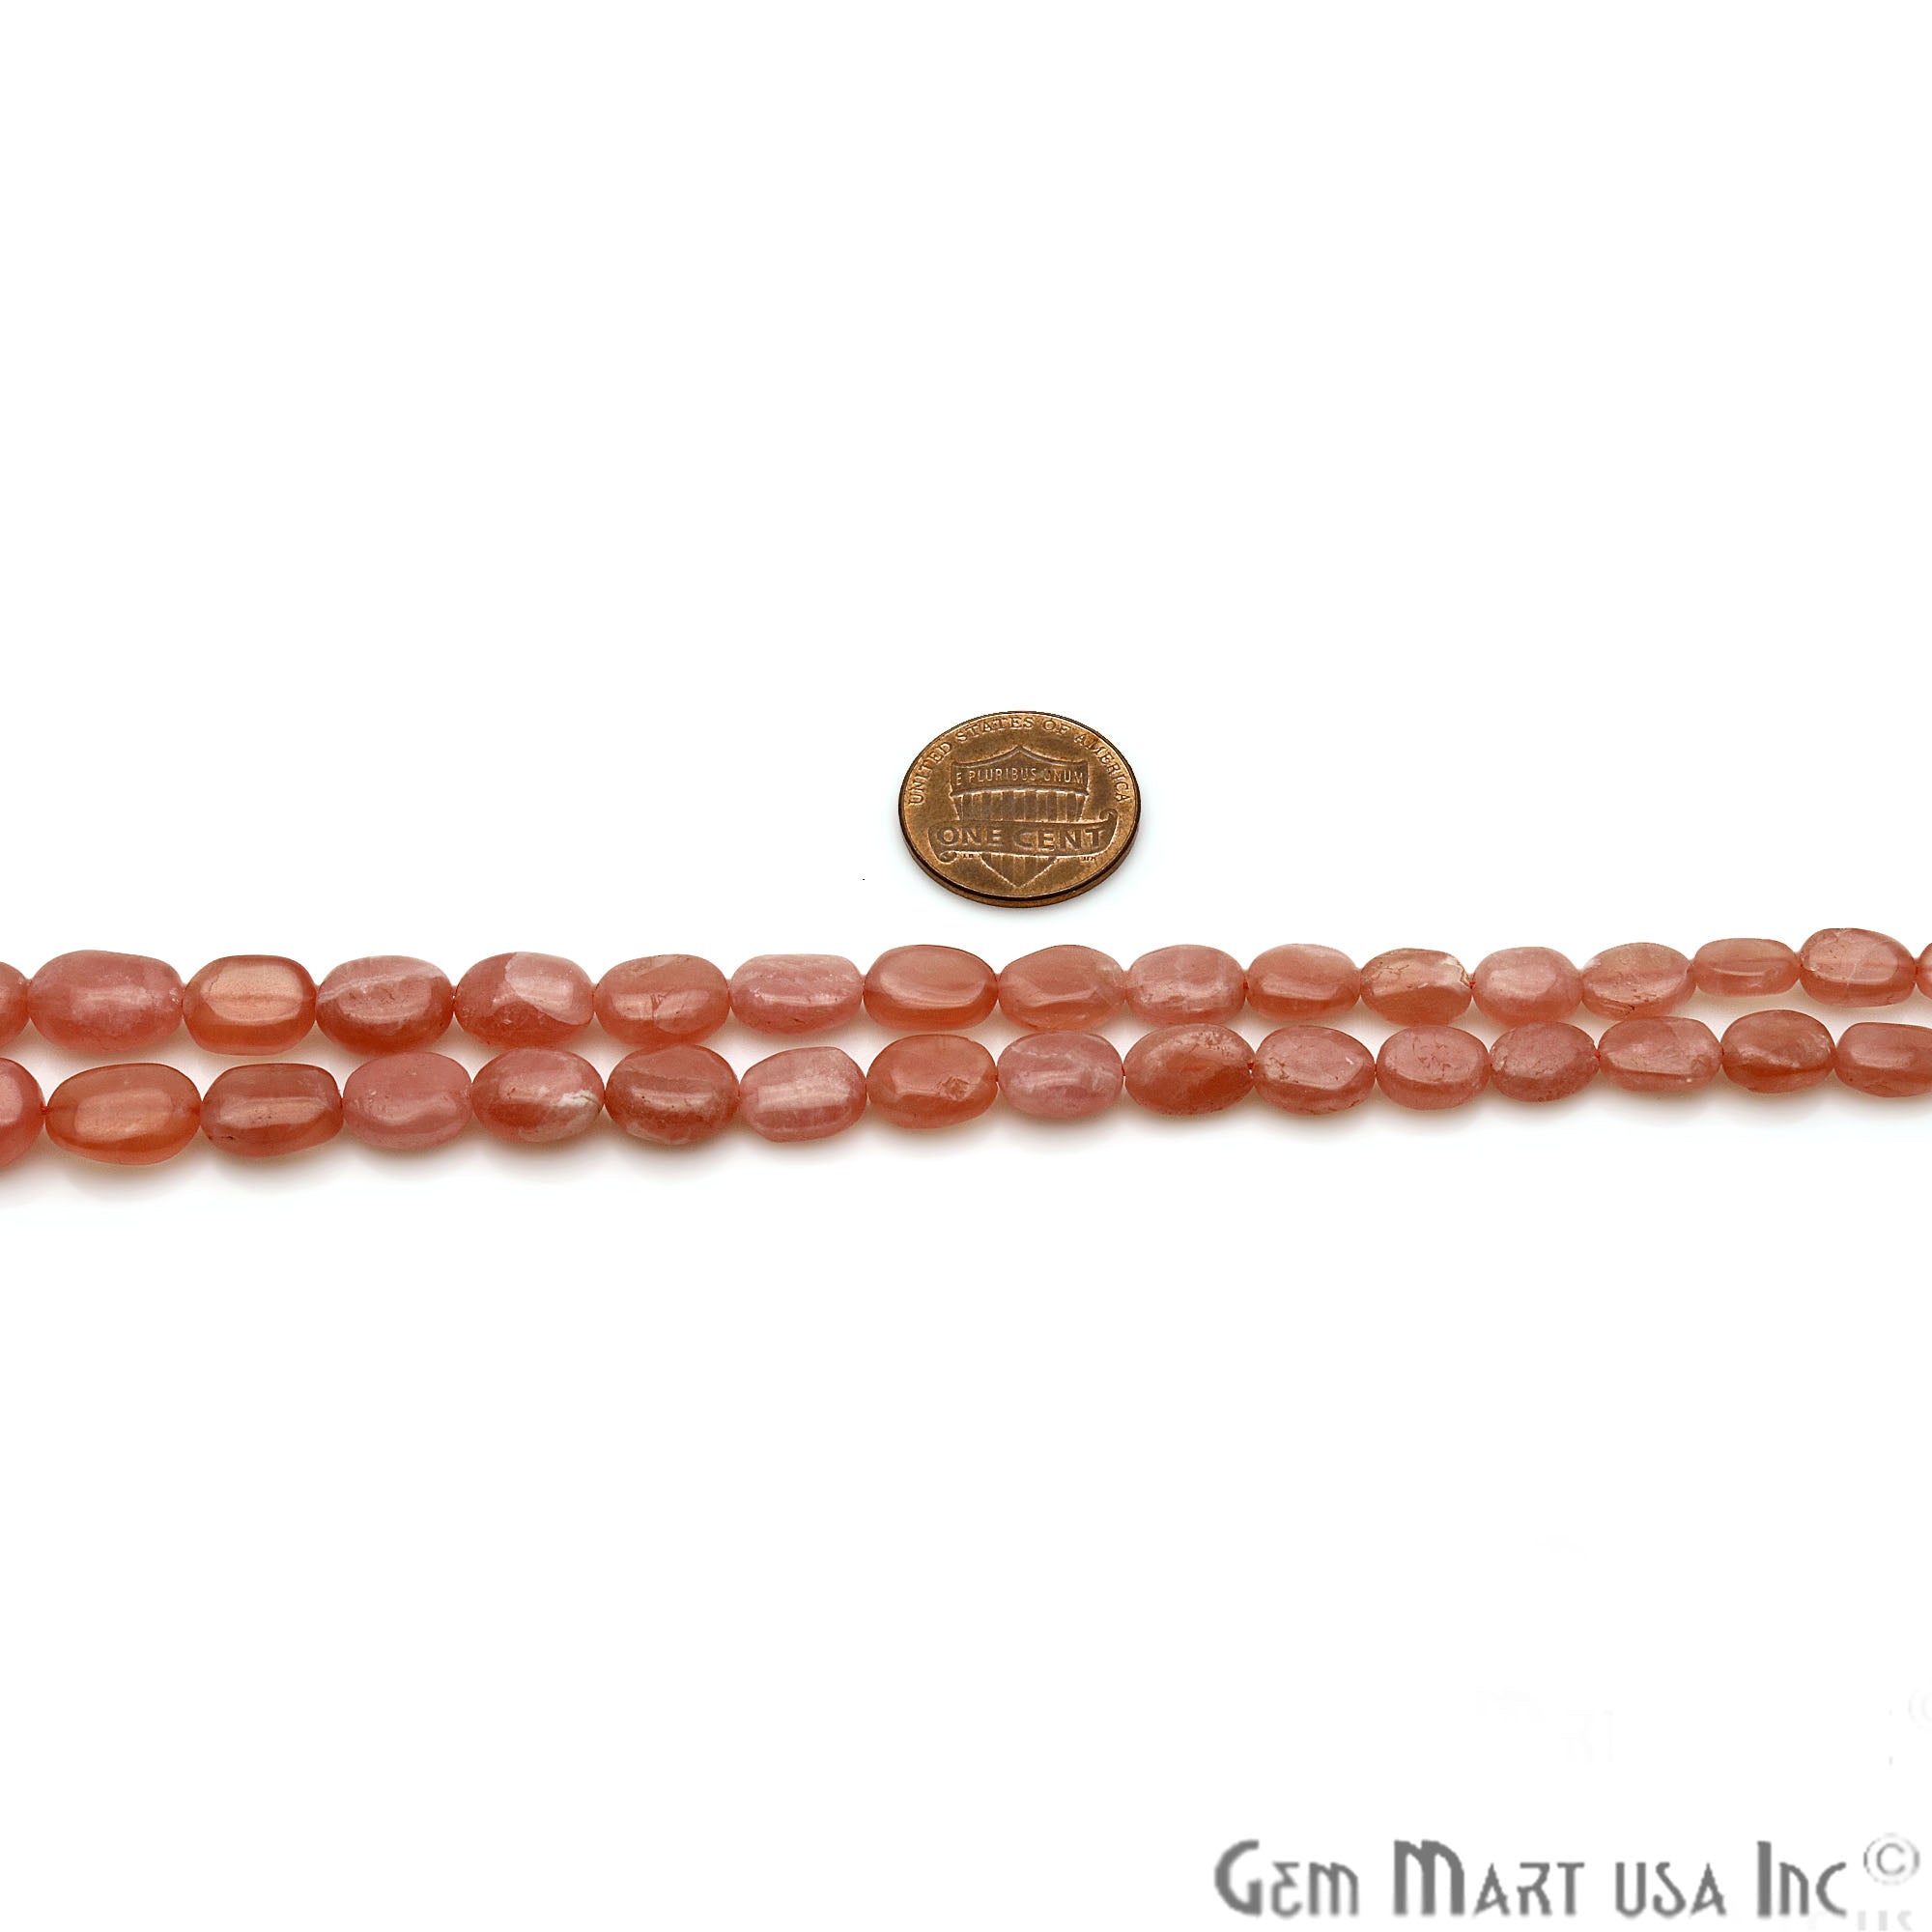 Sunstone Free Form 12x8mm Crafting Beads Gemstone Strands 16INCH - GemMartUSA